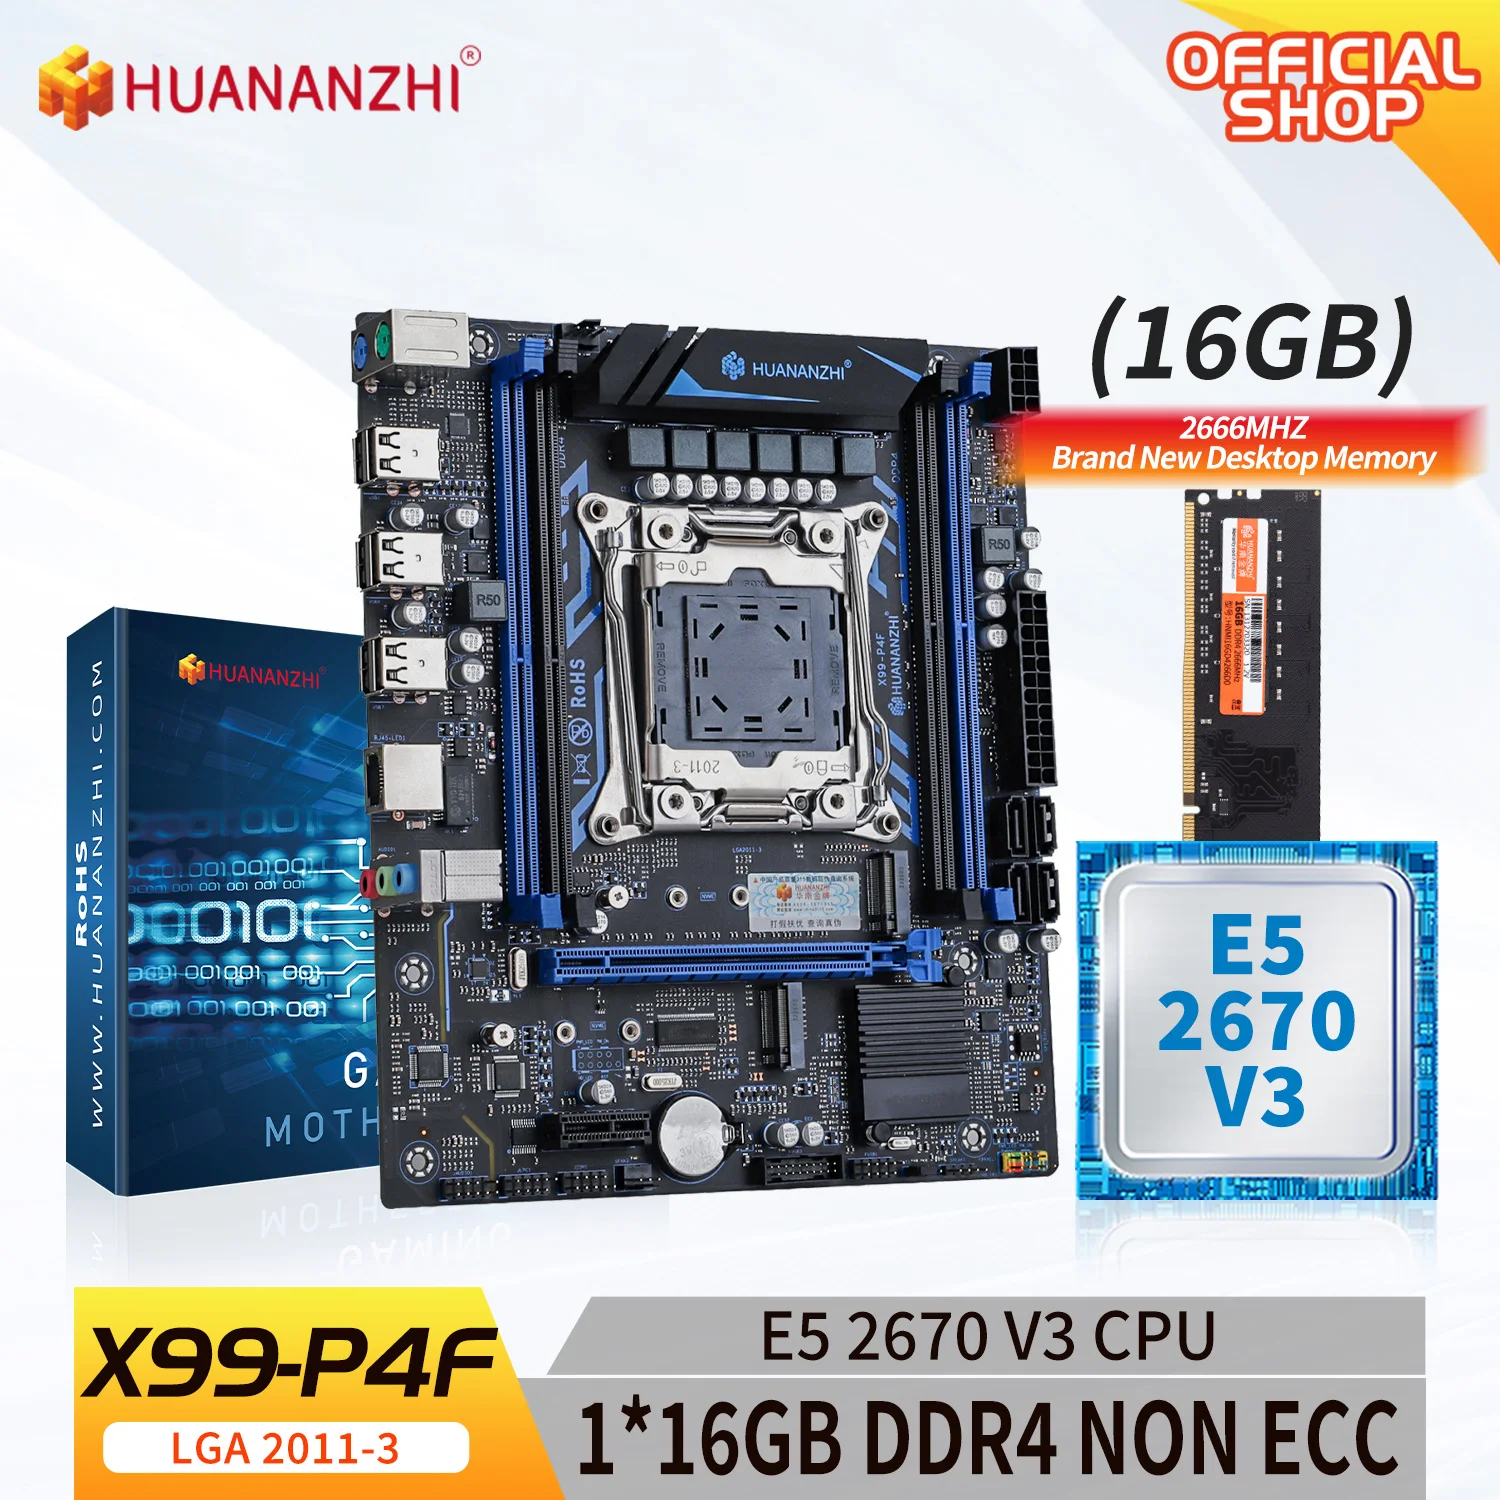 

HUANANZHI X99 P4F LGA 2011-3 XEON X99 материнская плата с Intel E5 2670 V3 с 1*16G DDR4 без ECC памяти комбинированный комплект NVME